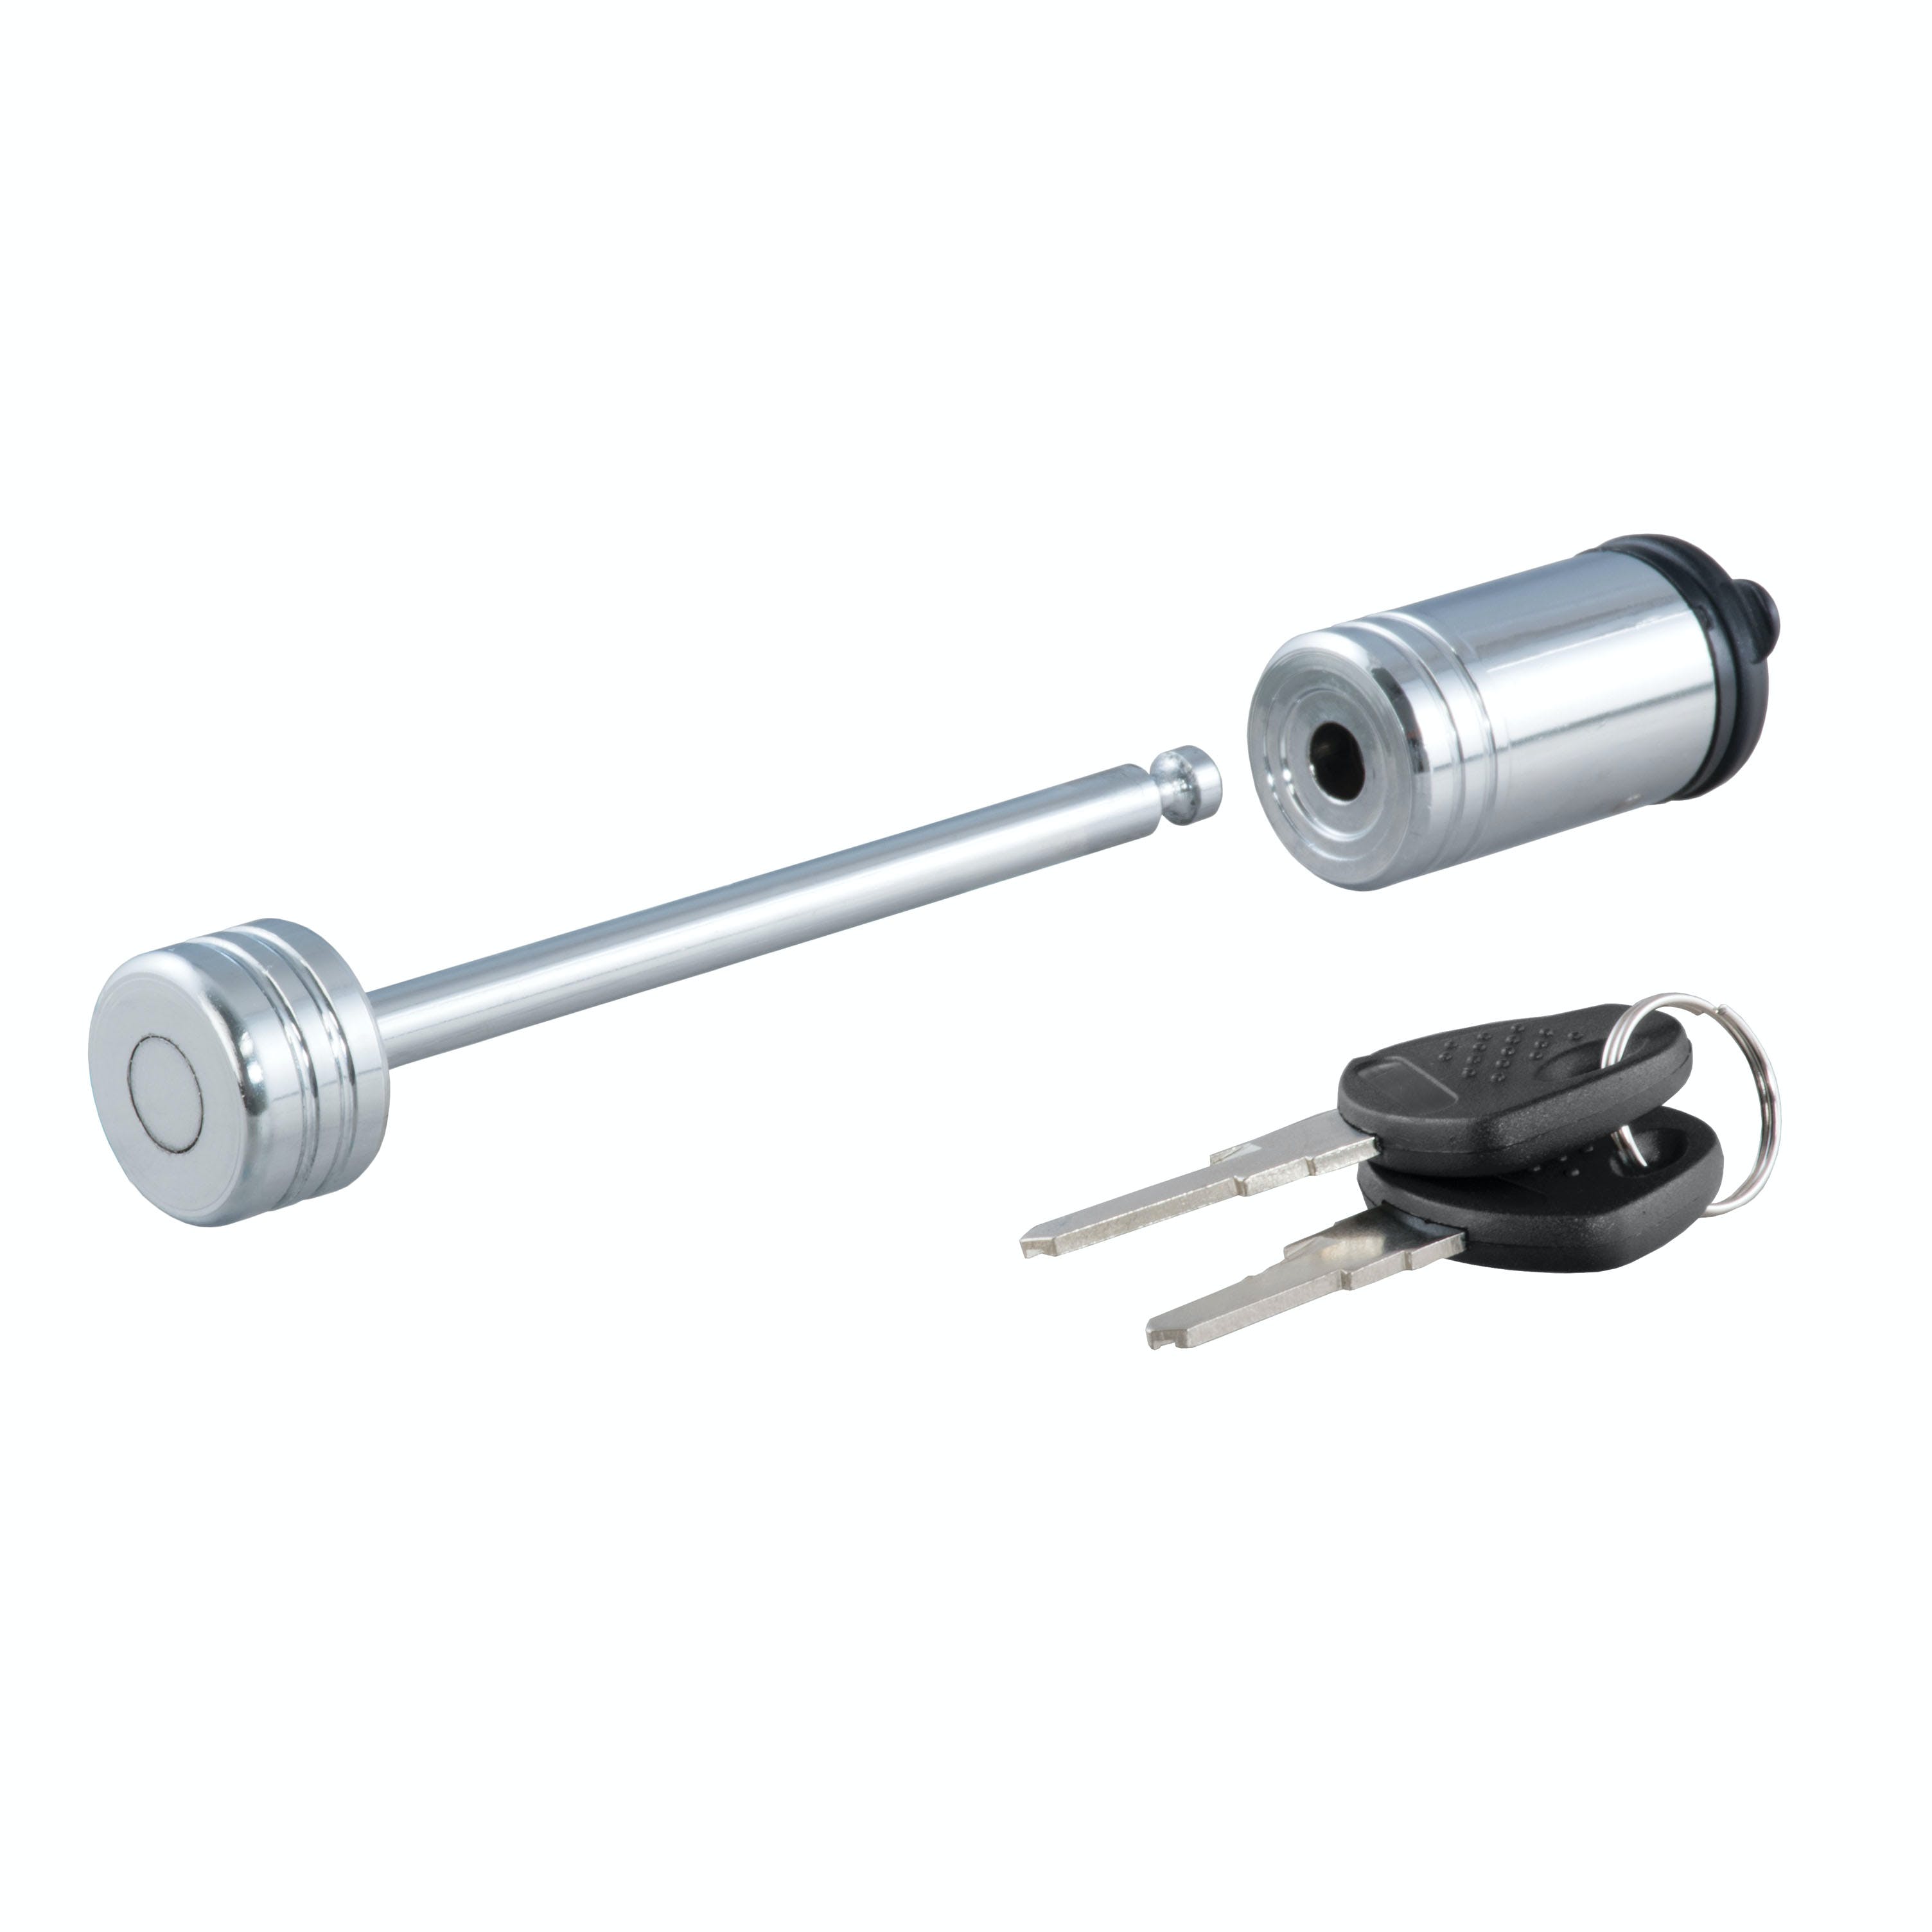 CURT 23523 Coupler Lock (1/4 Pin, 3-3/8 Latch Span, Barbell, Chrome)